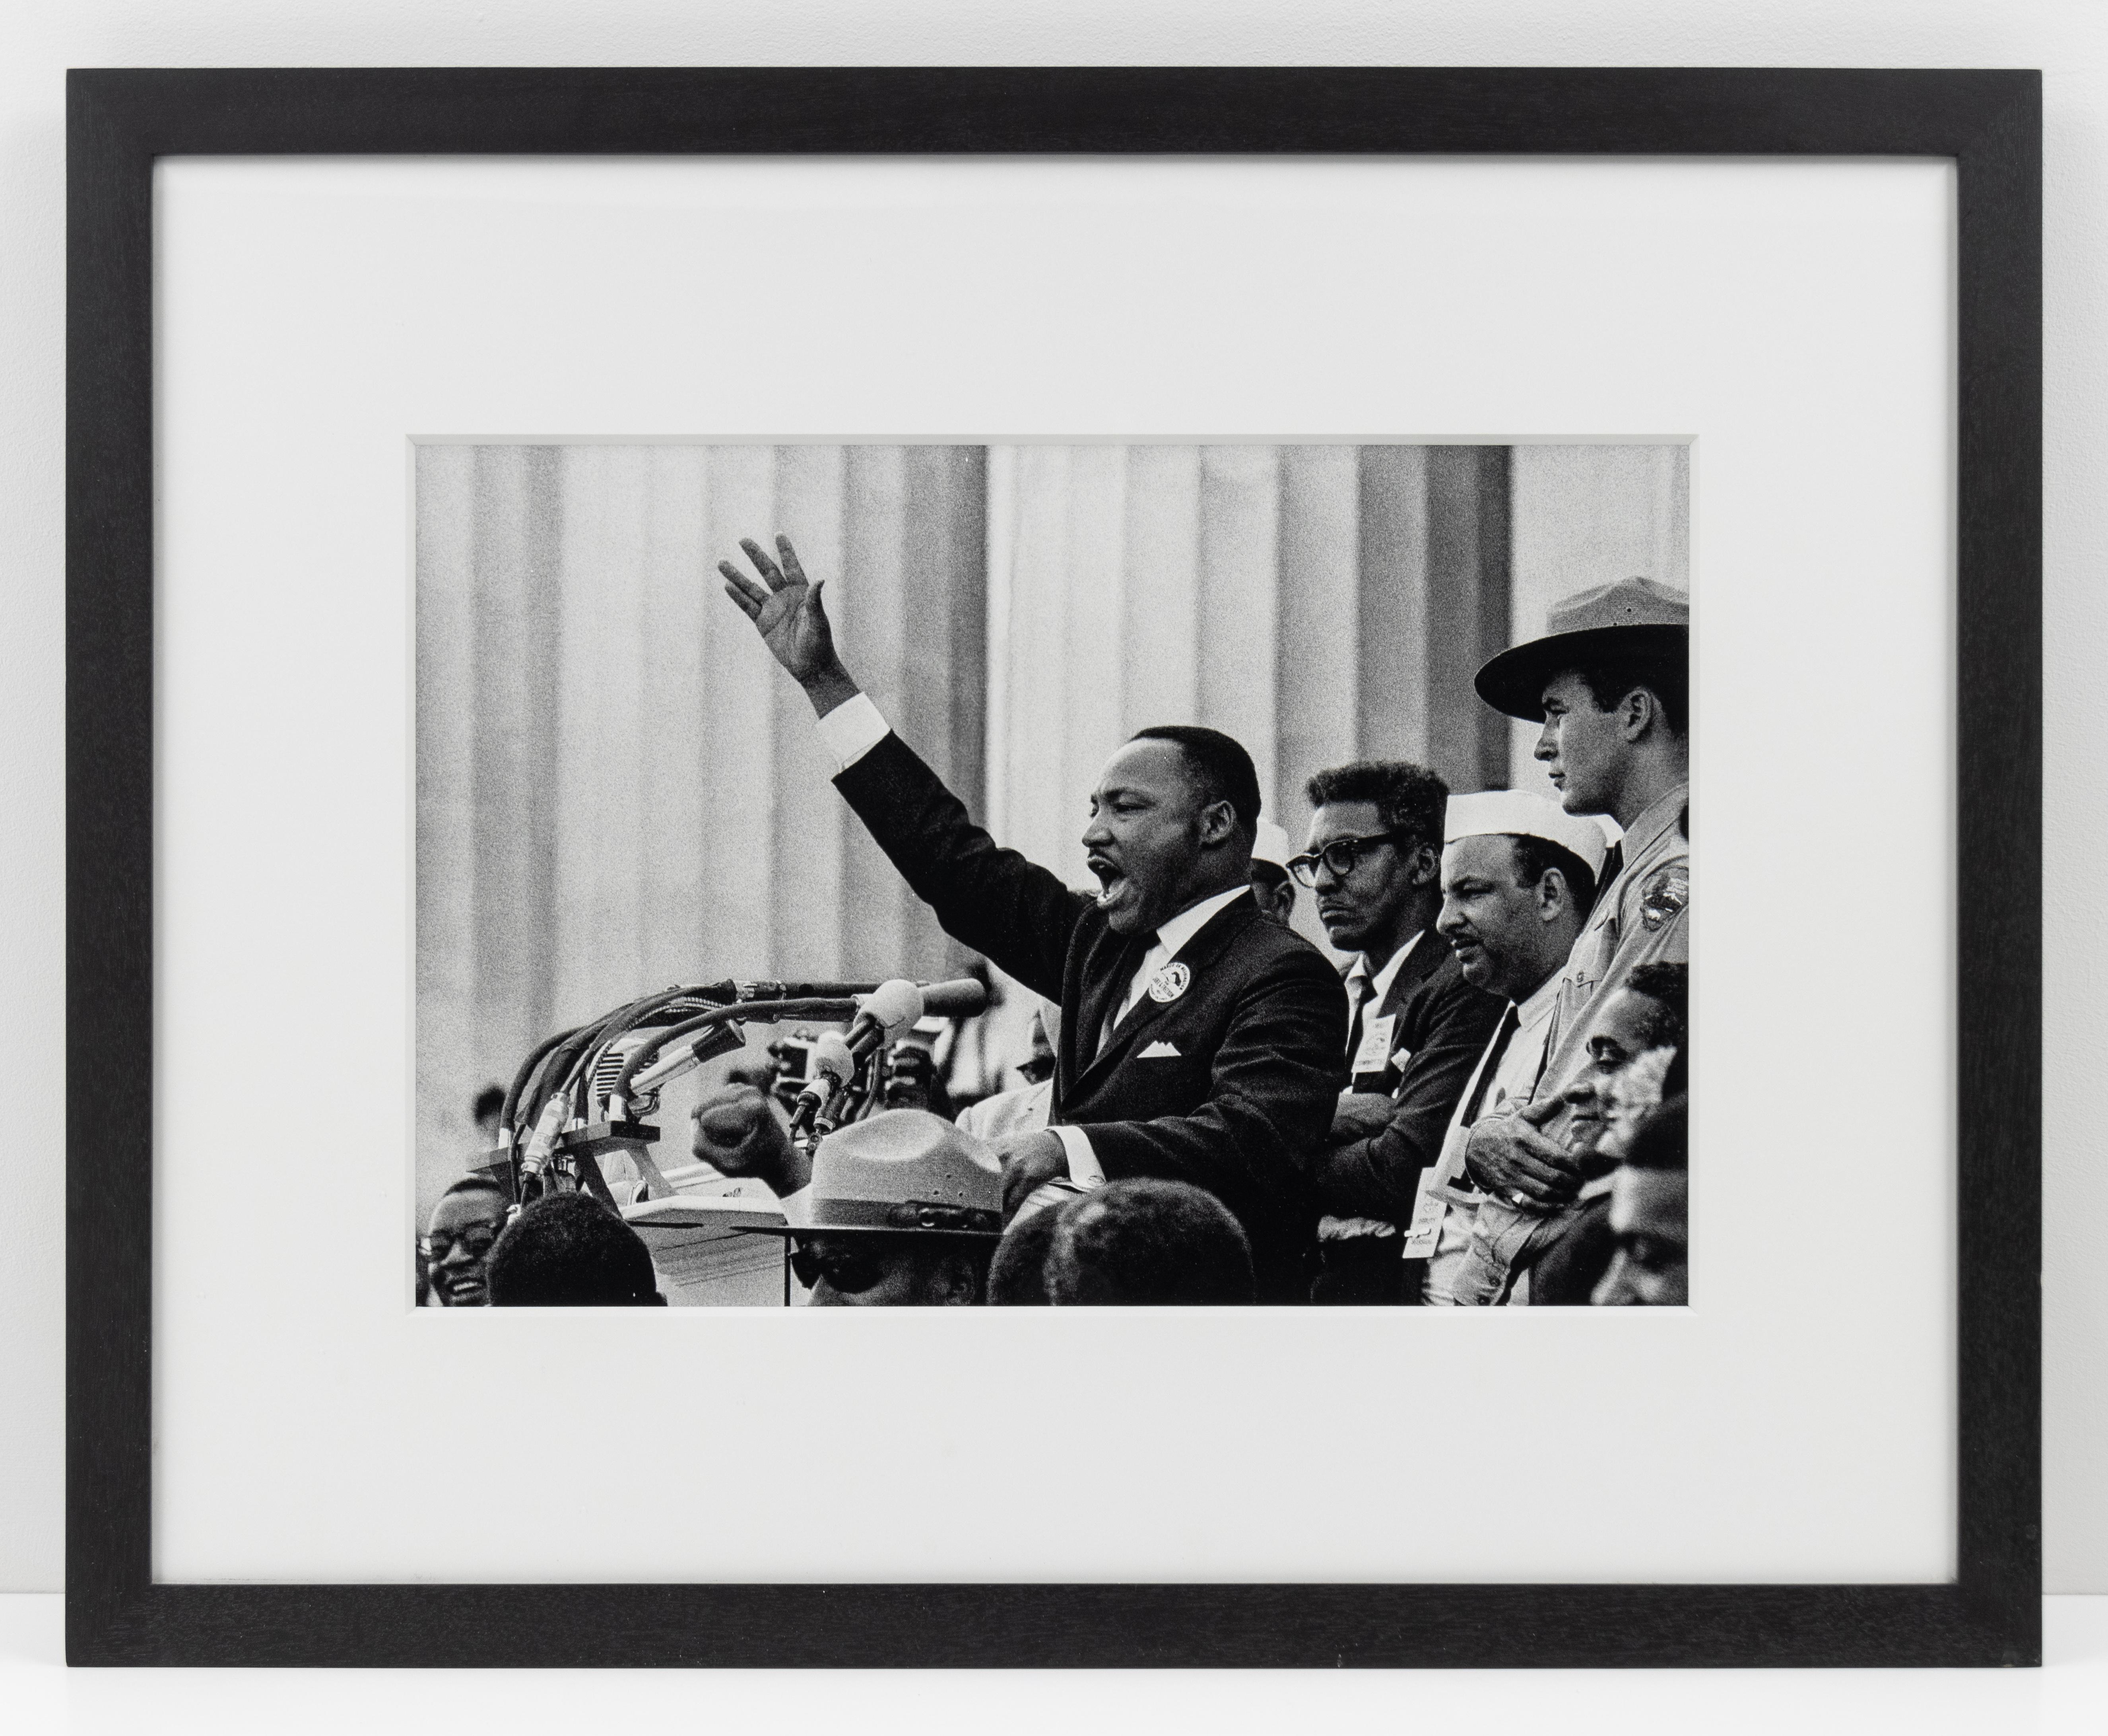 I Have a Dream speech, March on Washington - Contemporary Photograph by Bob Adelman